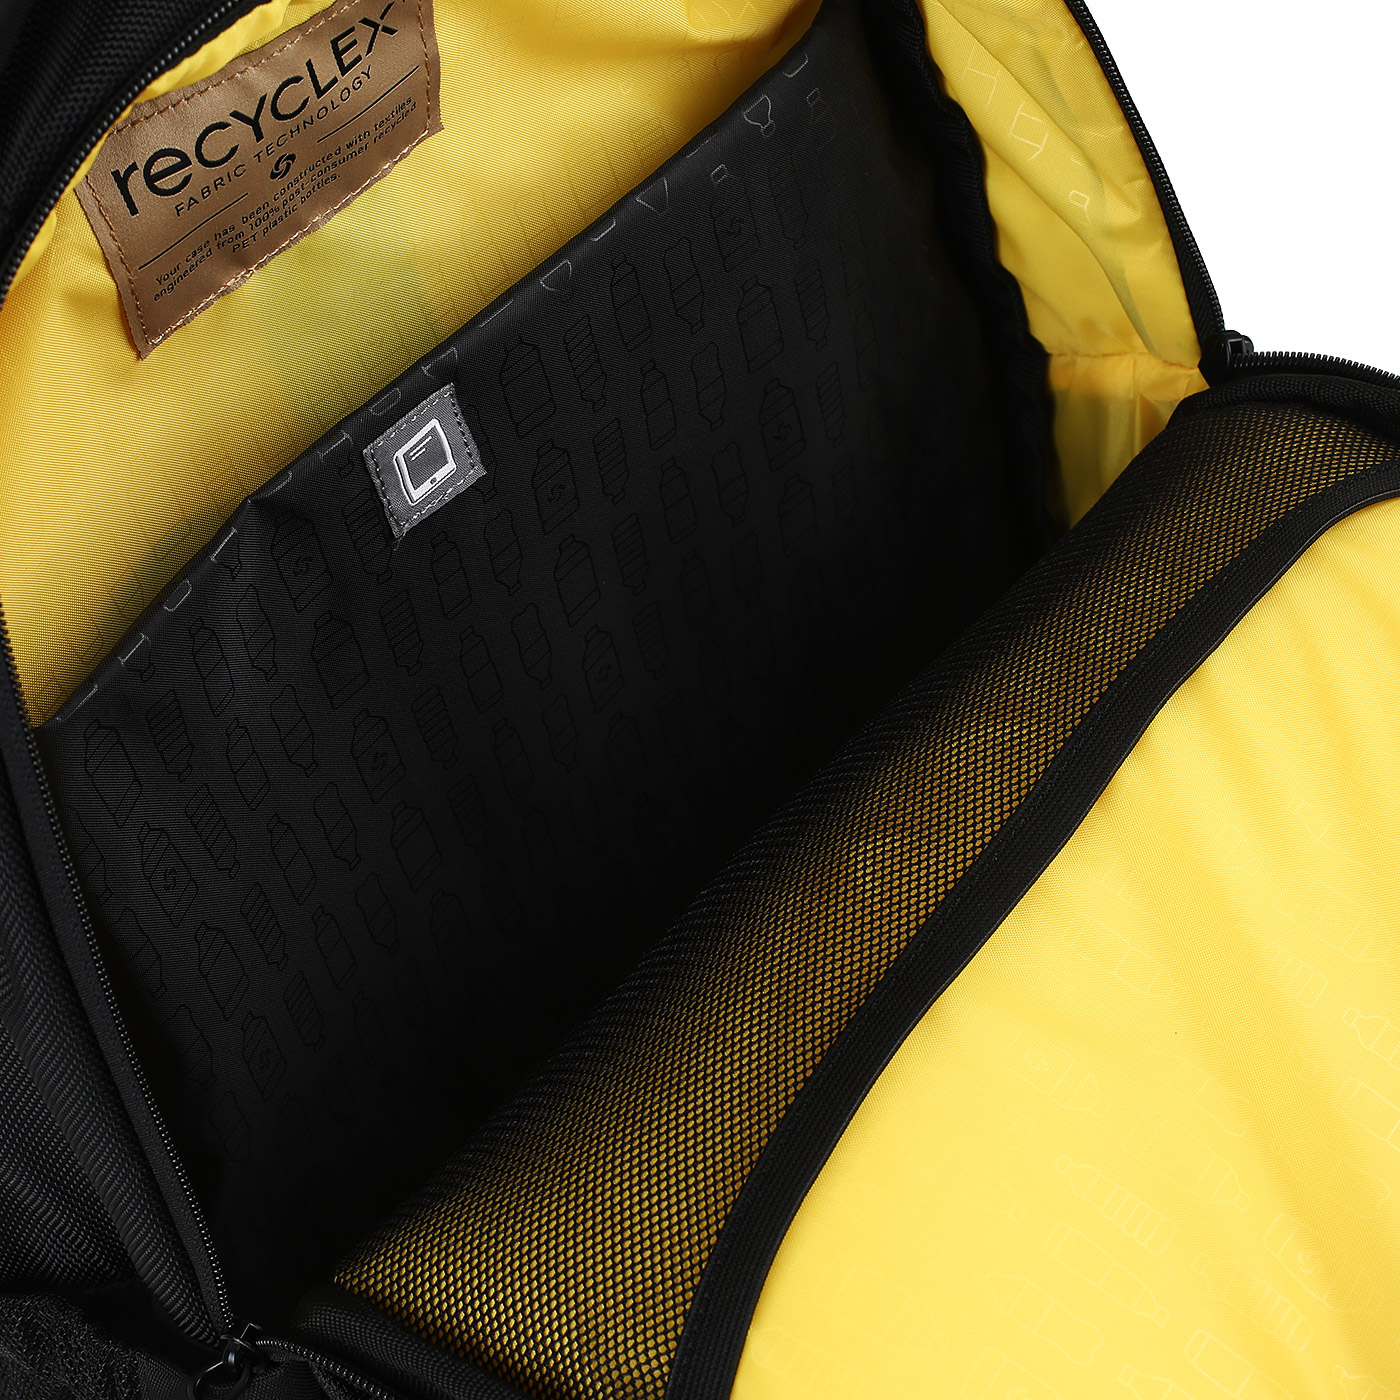 Рюкзак для ноутбука Samsonite Iconn Eco